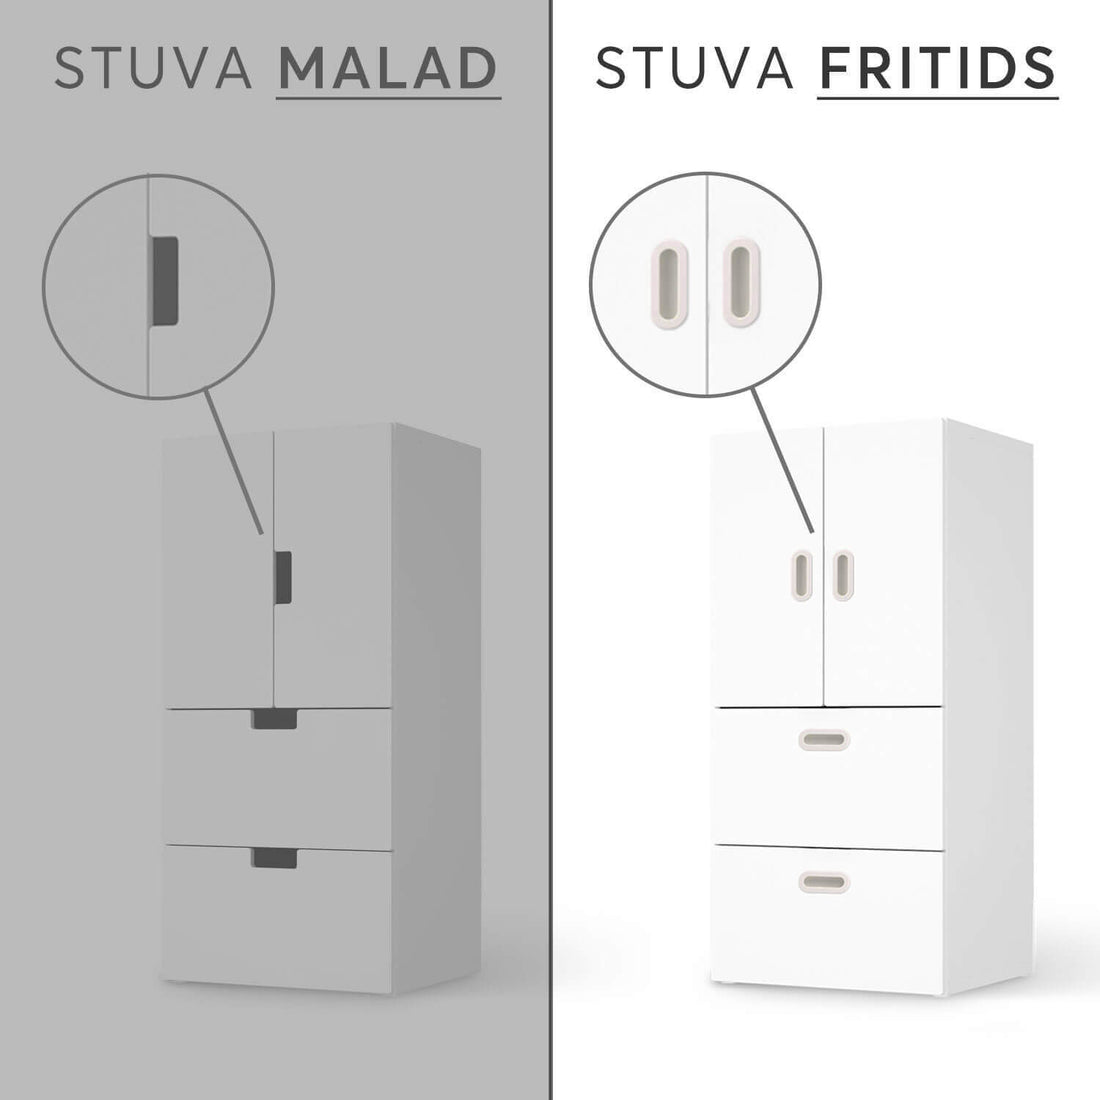 Vergleich IKEA Stuva Fritids / Malad - Blue Mandala